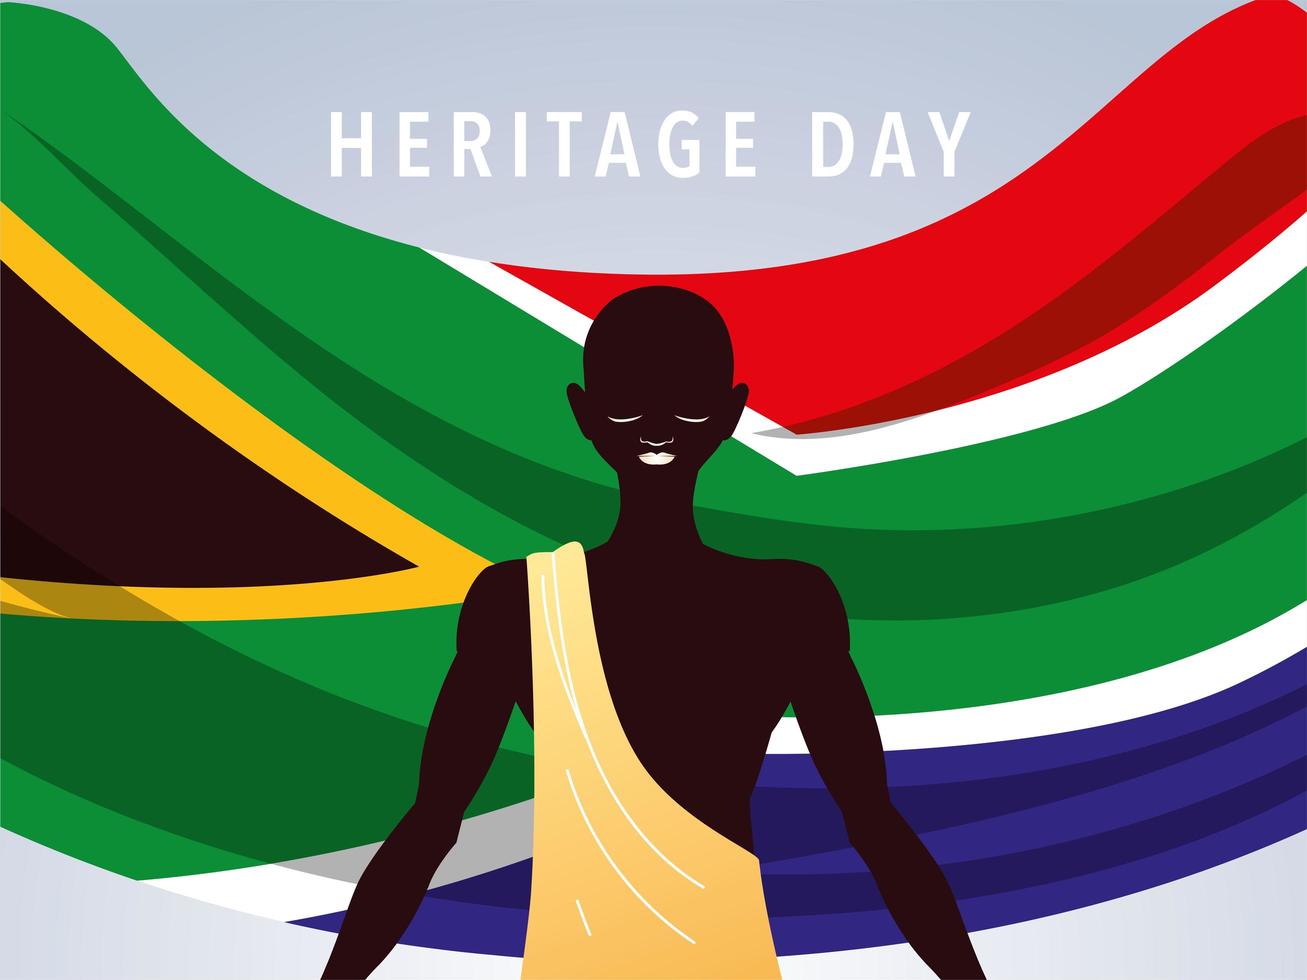 erfgoeddag met persoon afro en vlag van zuid-afrika vector